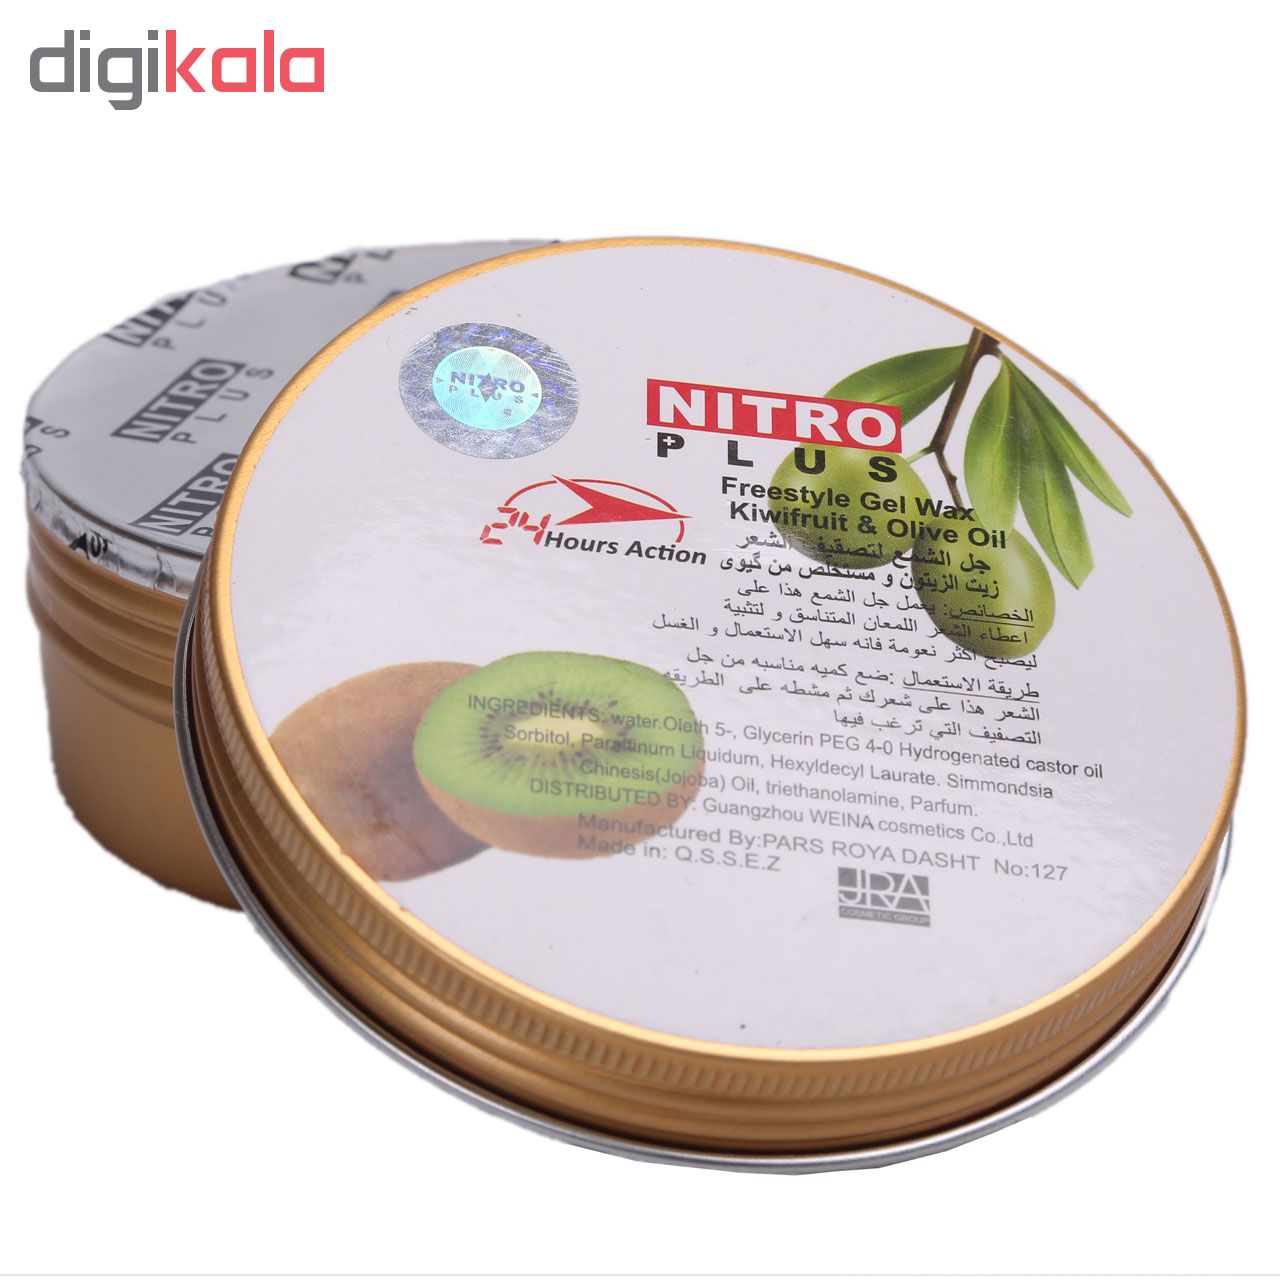 چسب مو نیترو مدل Kiwifruit & Olive oil حجم 145 میلی لیتر -  - 3